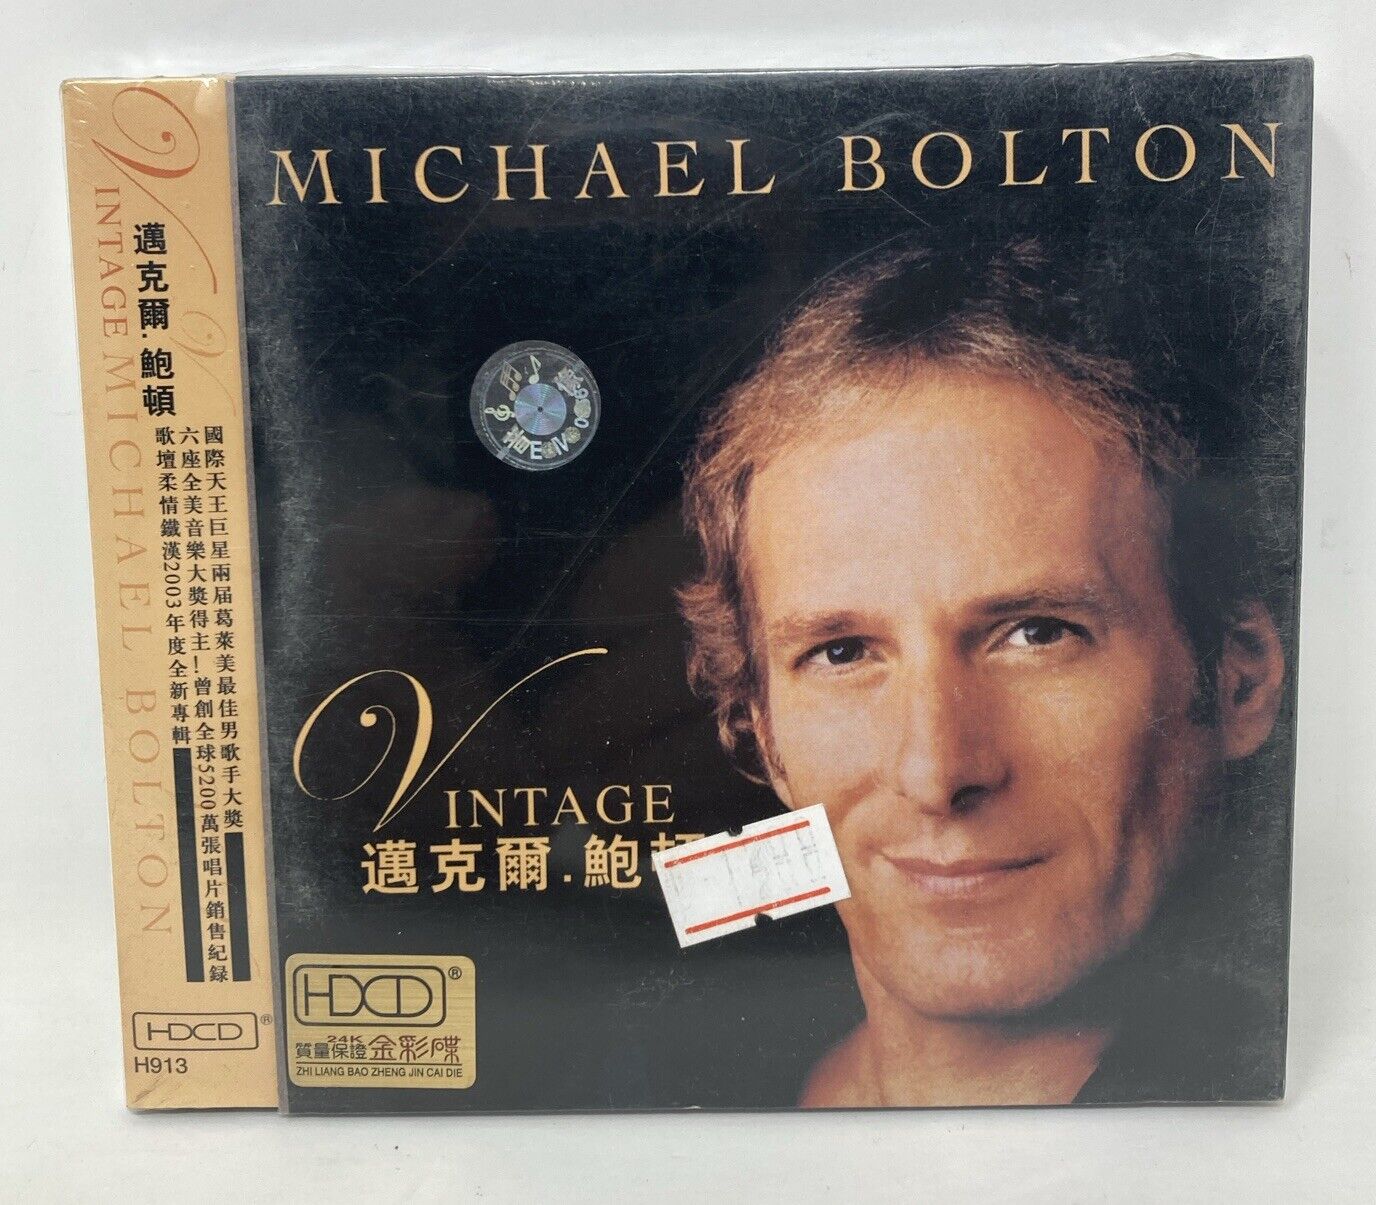 Michael Bolton Vintage Japanese Import HDCD Digitally Remastered CD 2003 Rare